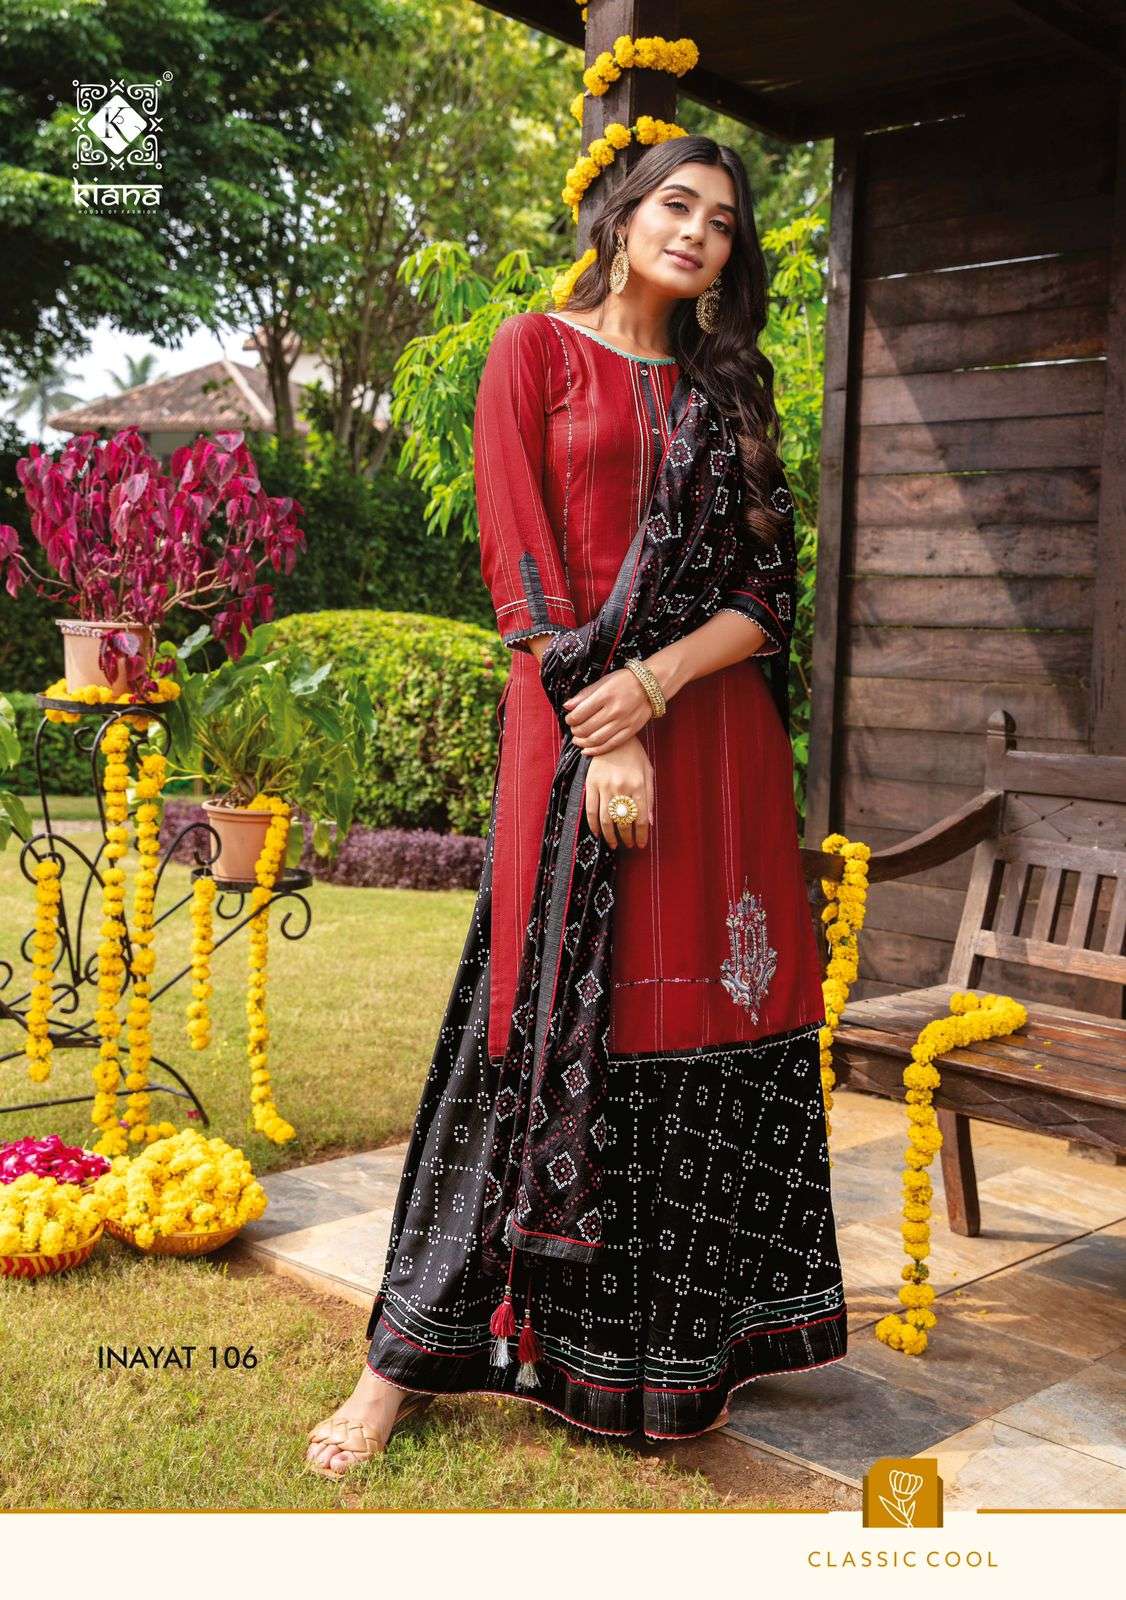 kiana fashion inayat 101-108 series party wear look kurtis sharaa with fancy dupatta collection surat